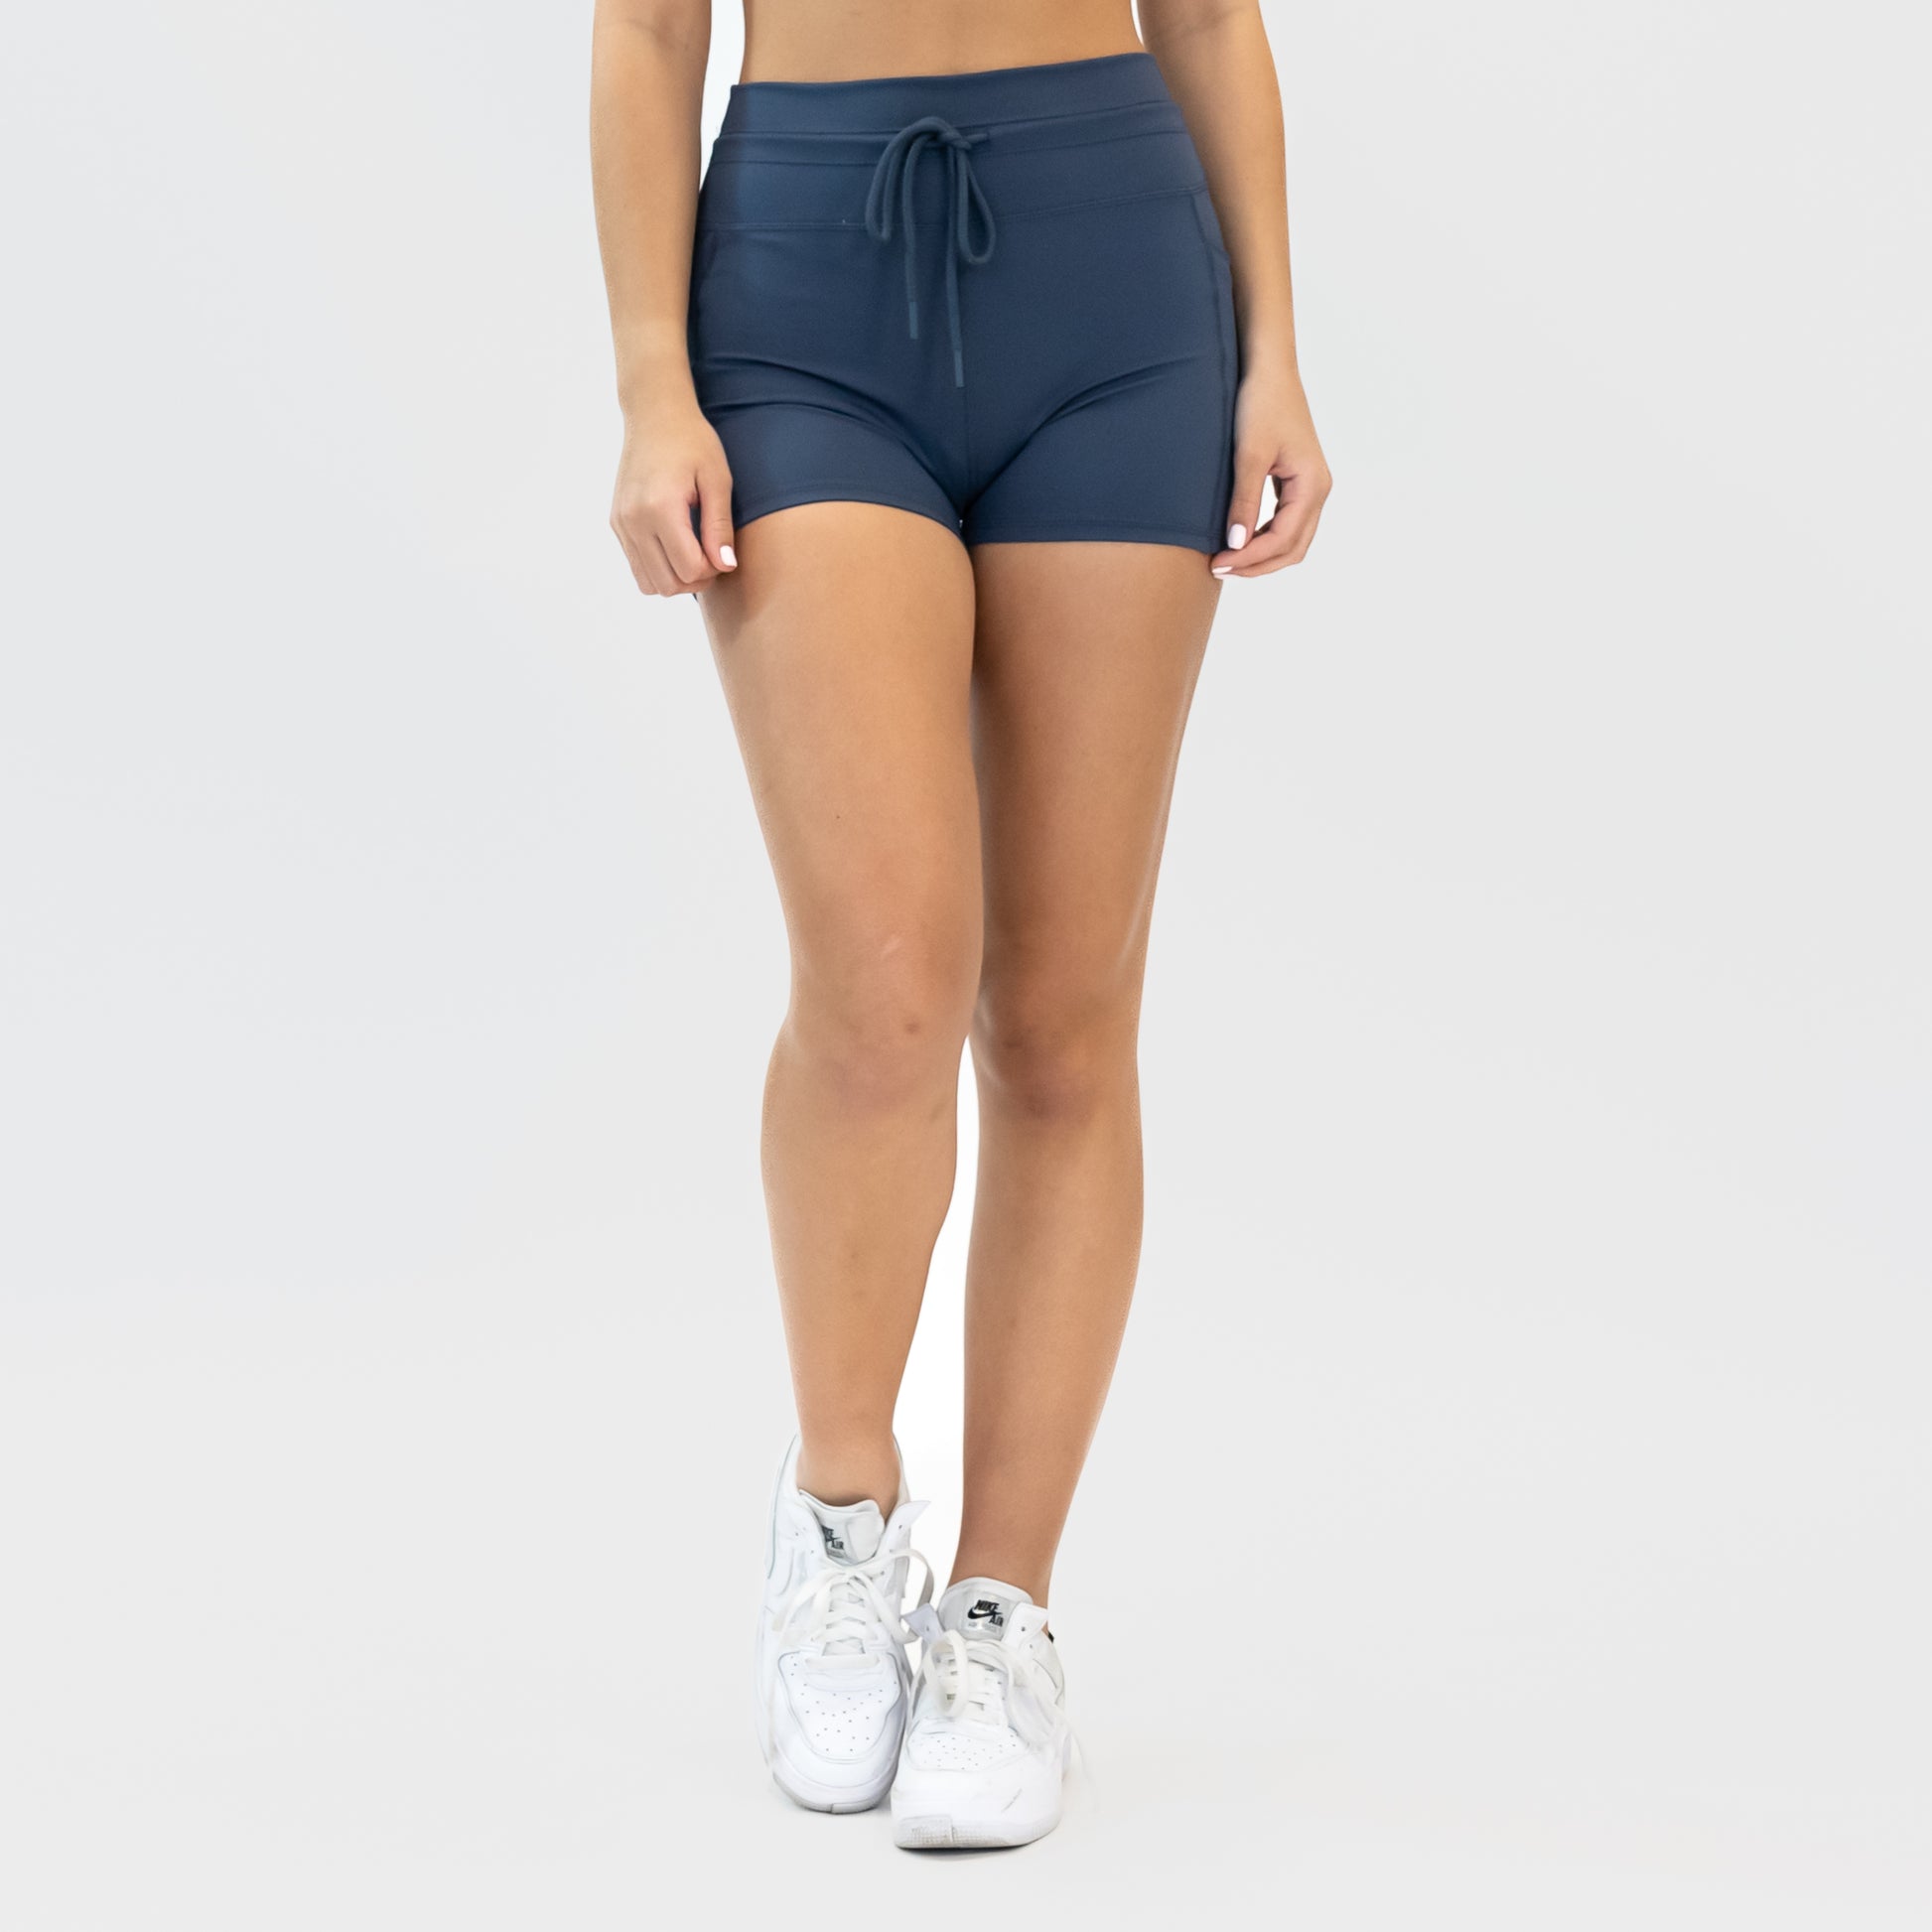 Lux Baseline Shorts (5 in. inseam) - Jet Stream